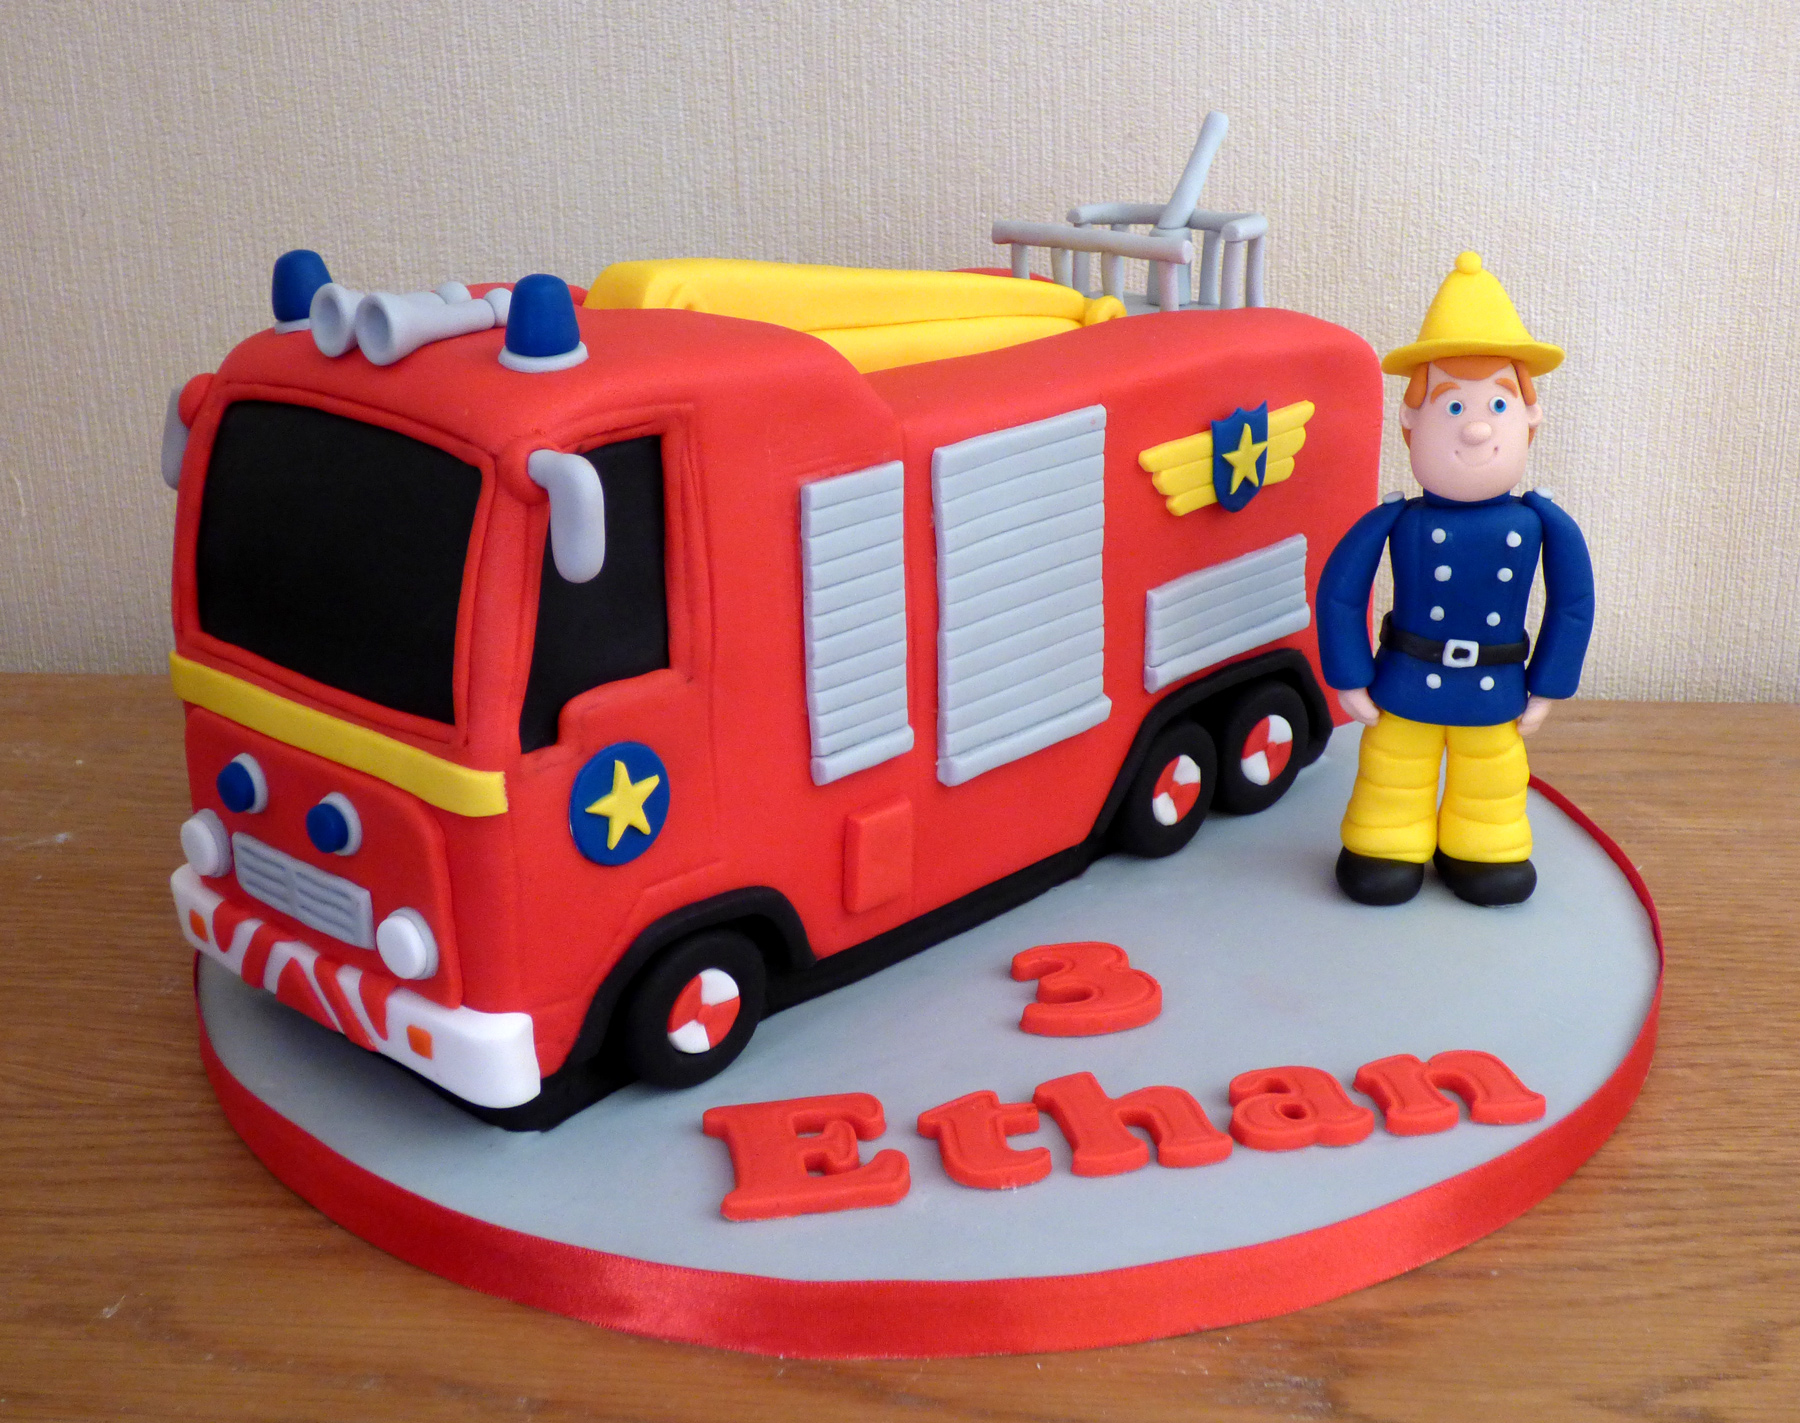 Fireman cake topper, Fire fighter cake topper, Fireman Party Decoratio – JO  SEASONS CRAFTS